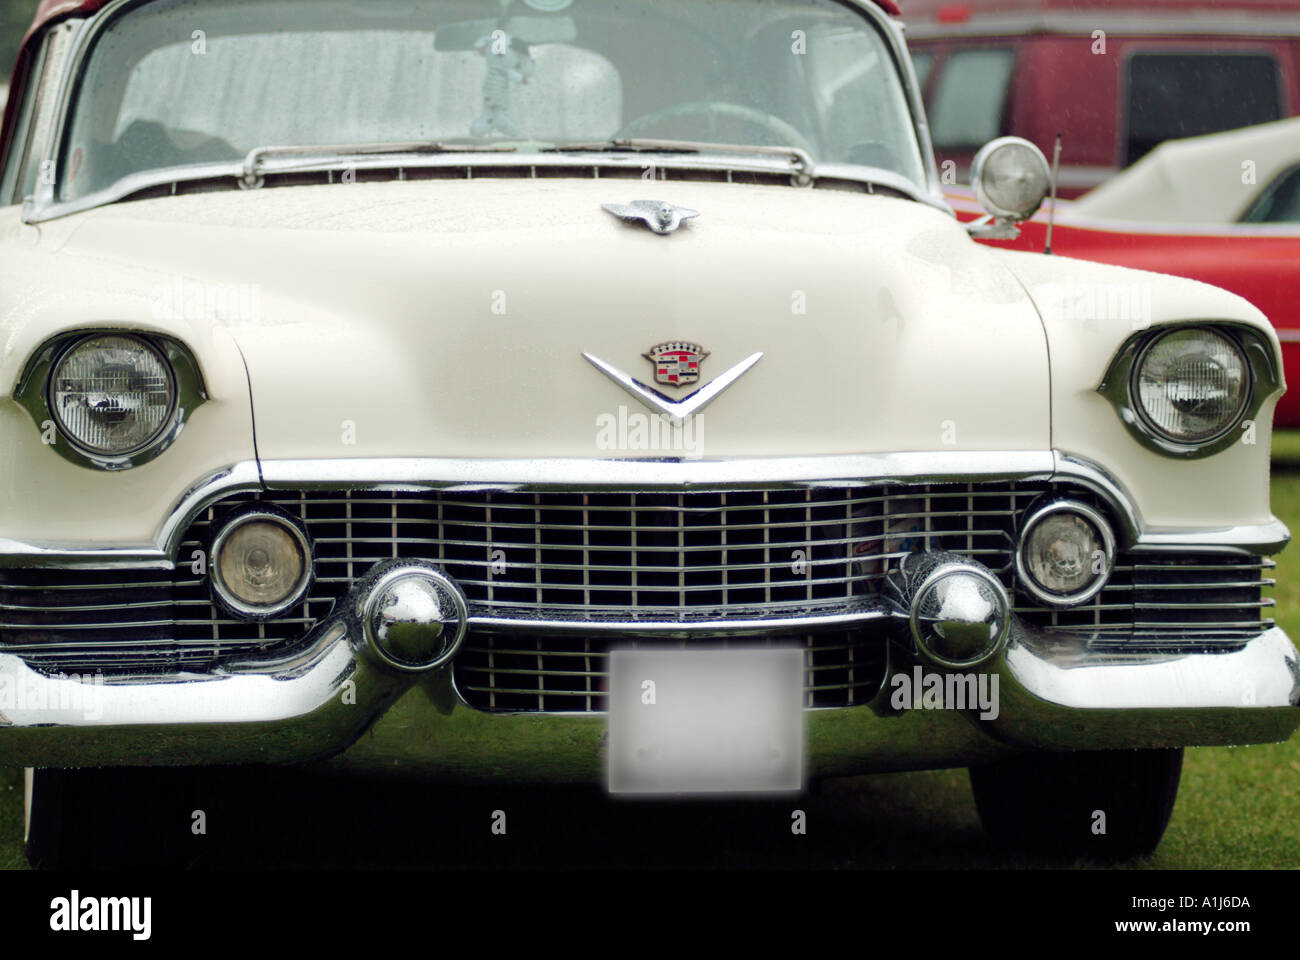 cadillac luxury car 1950 s 1956 v8 engine america american classic car chrome fins flash general motors Stock Photo